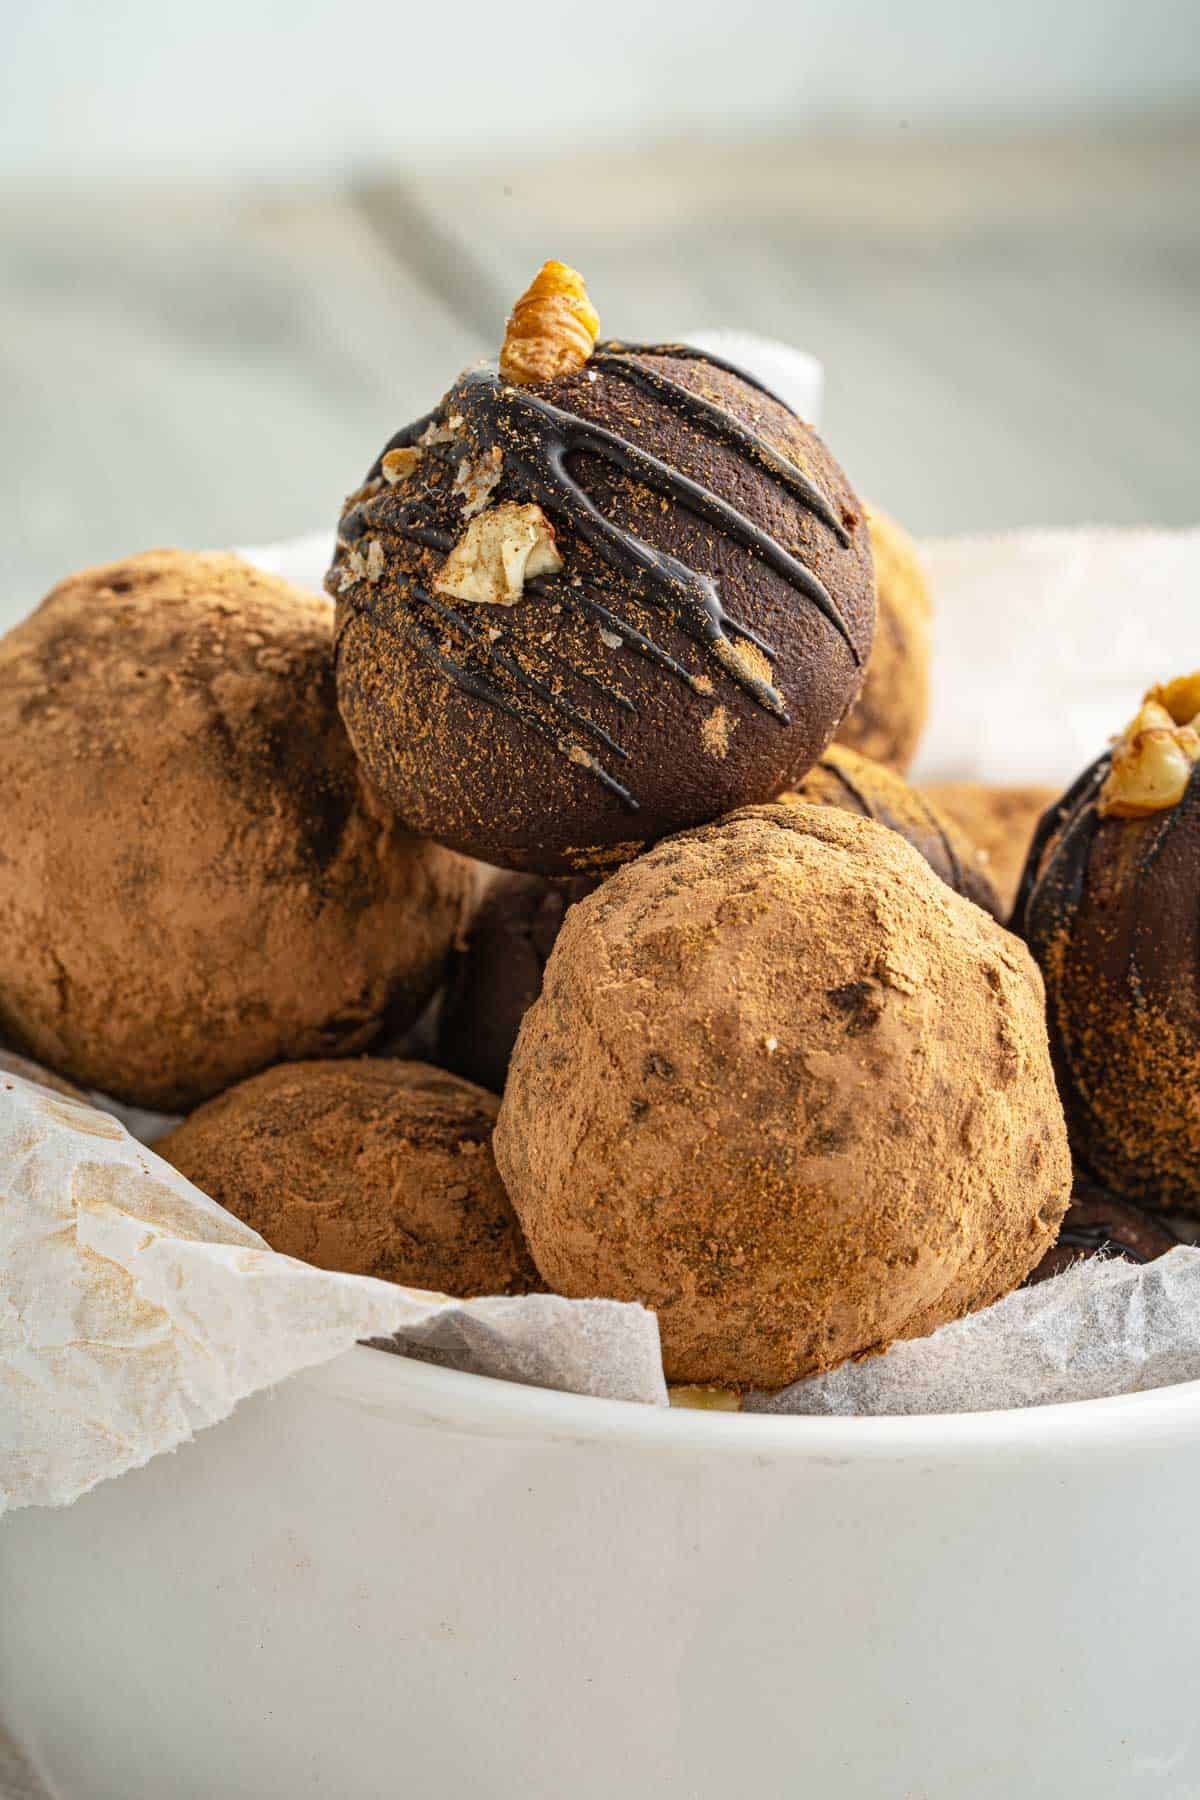 Chocolate Avocado Truffle balls in a bowl.